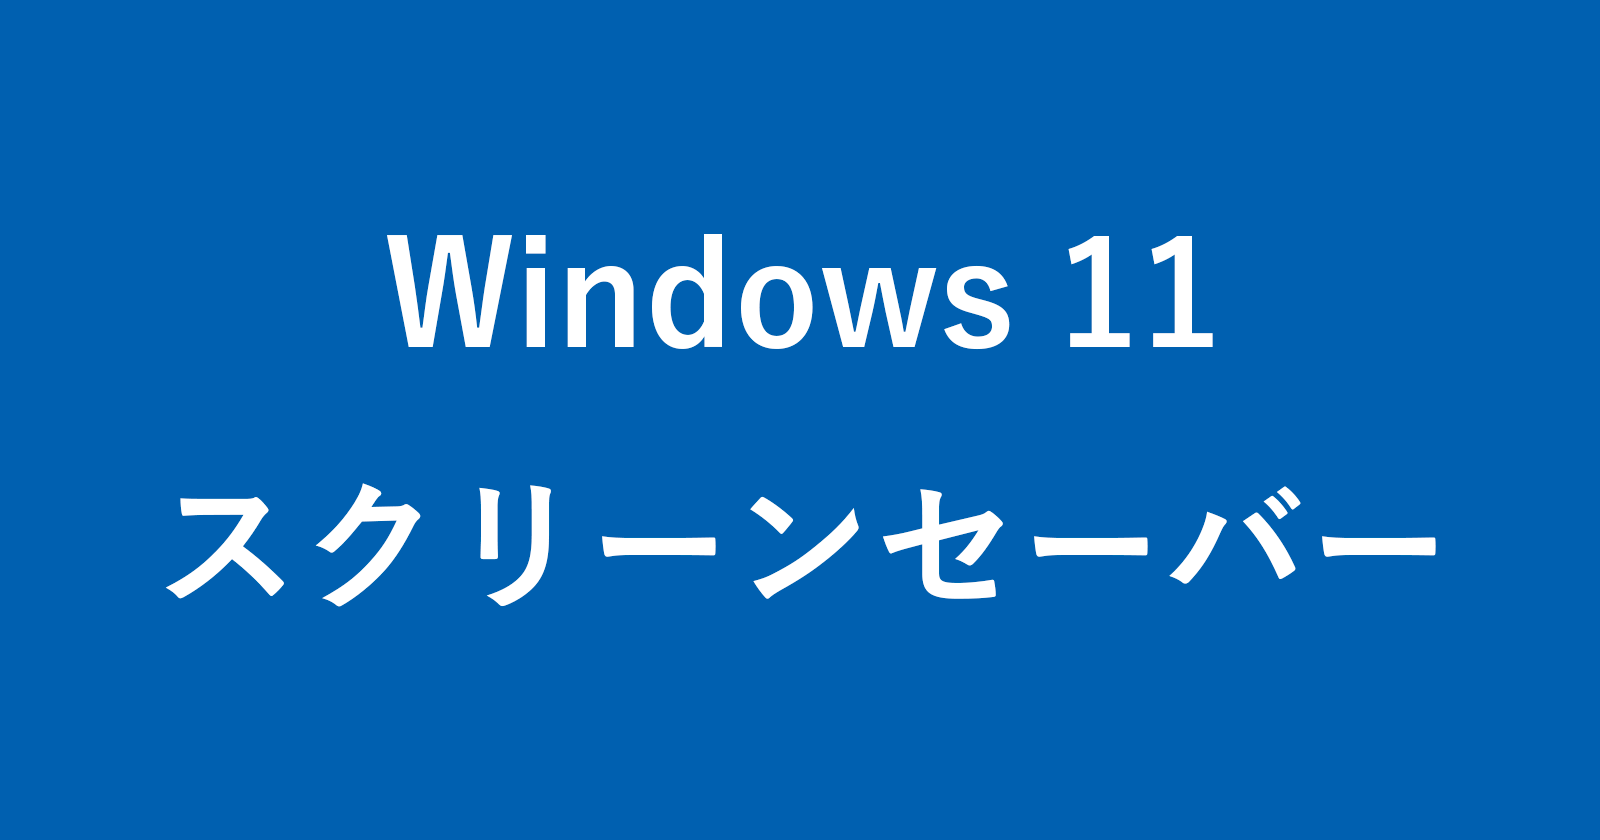 windows 11 screensaver